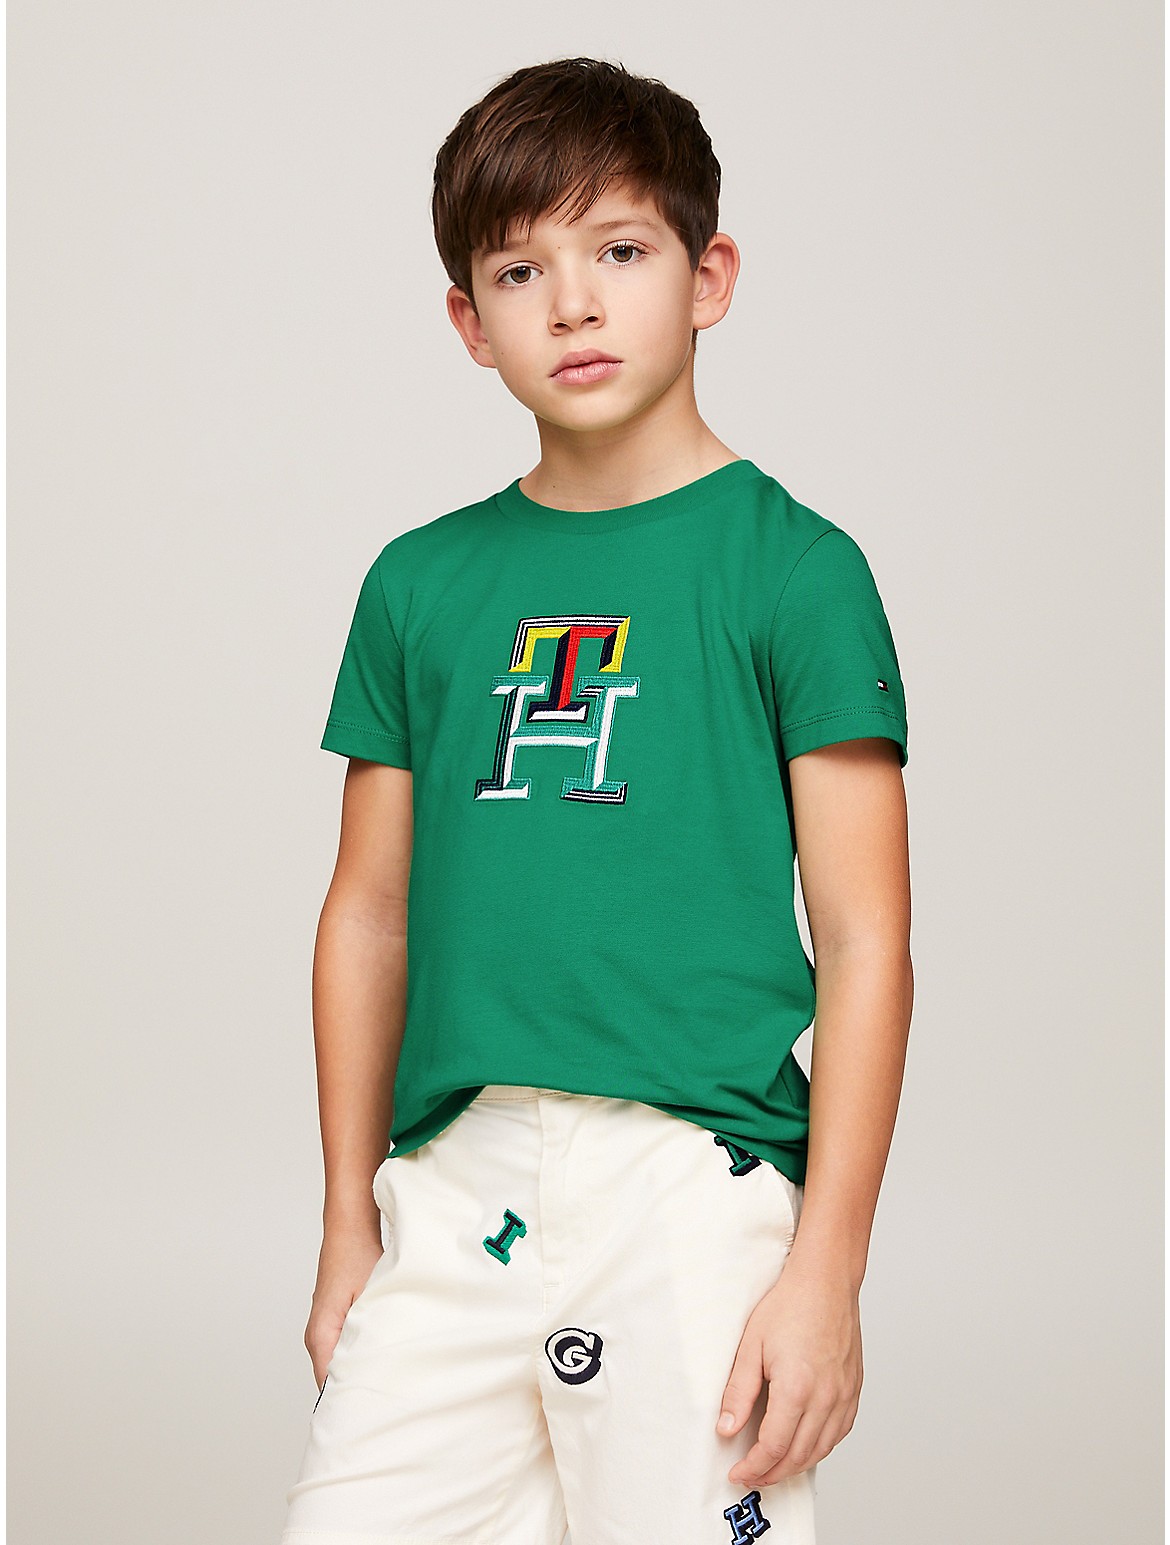 Tommy Hilfiger Boys' Kids' Embroidered Monogram T-Shirt - Green - 10